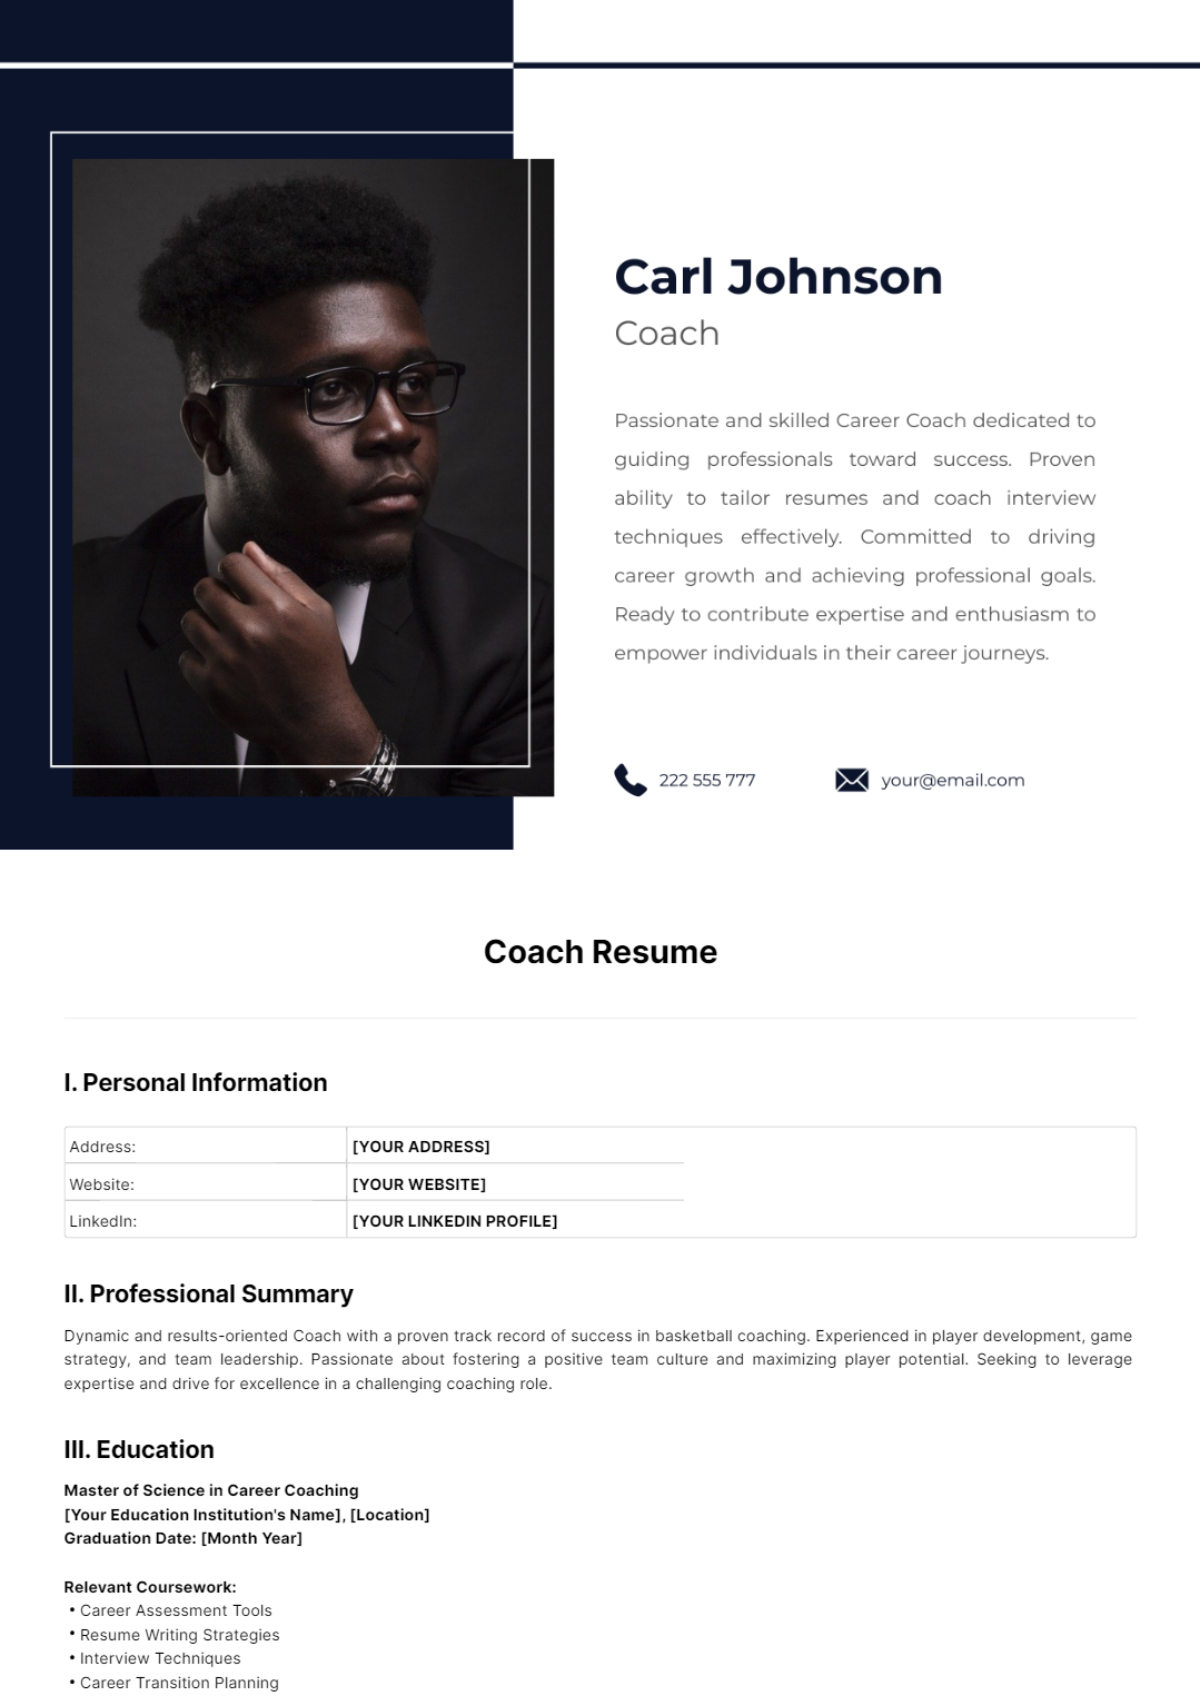 Coach Resume Template